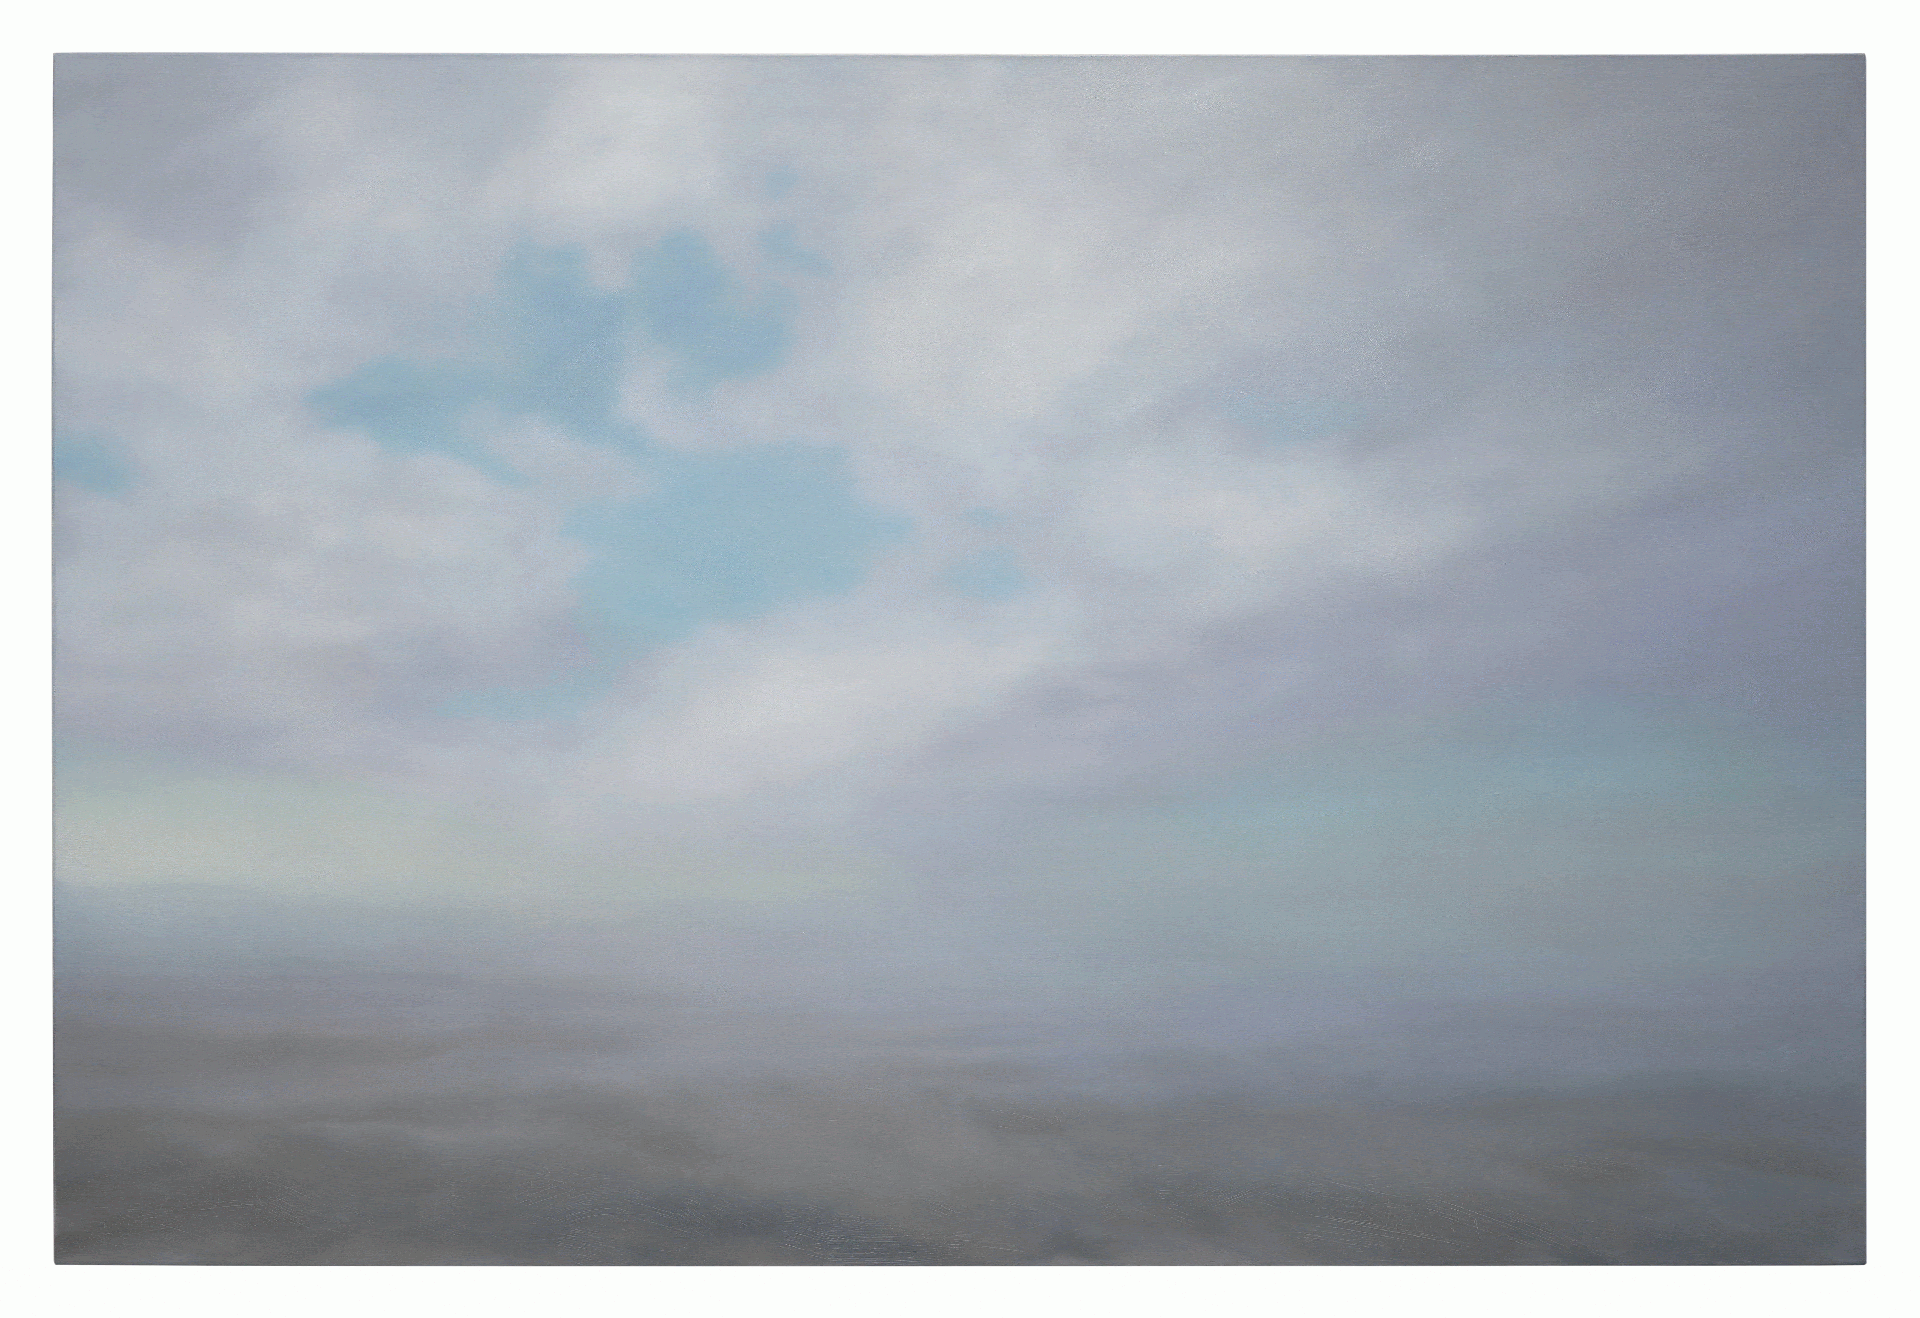 Gerhard Richter, Seestück (Seascape), 1975, est. $25–35 million